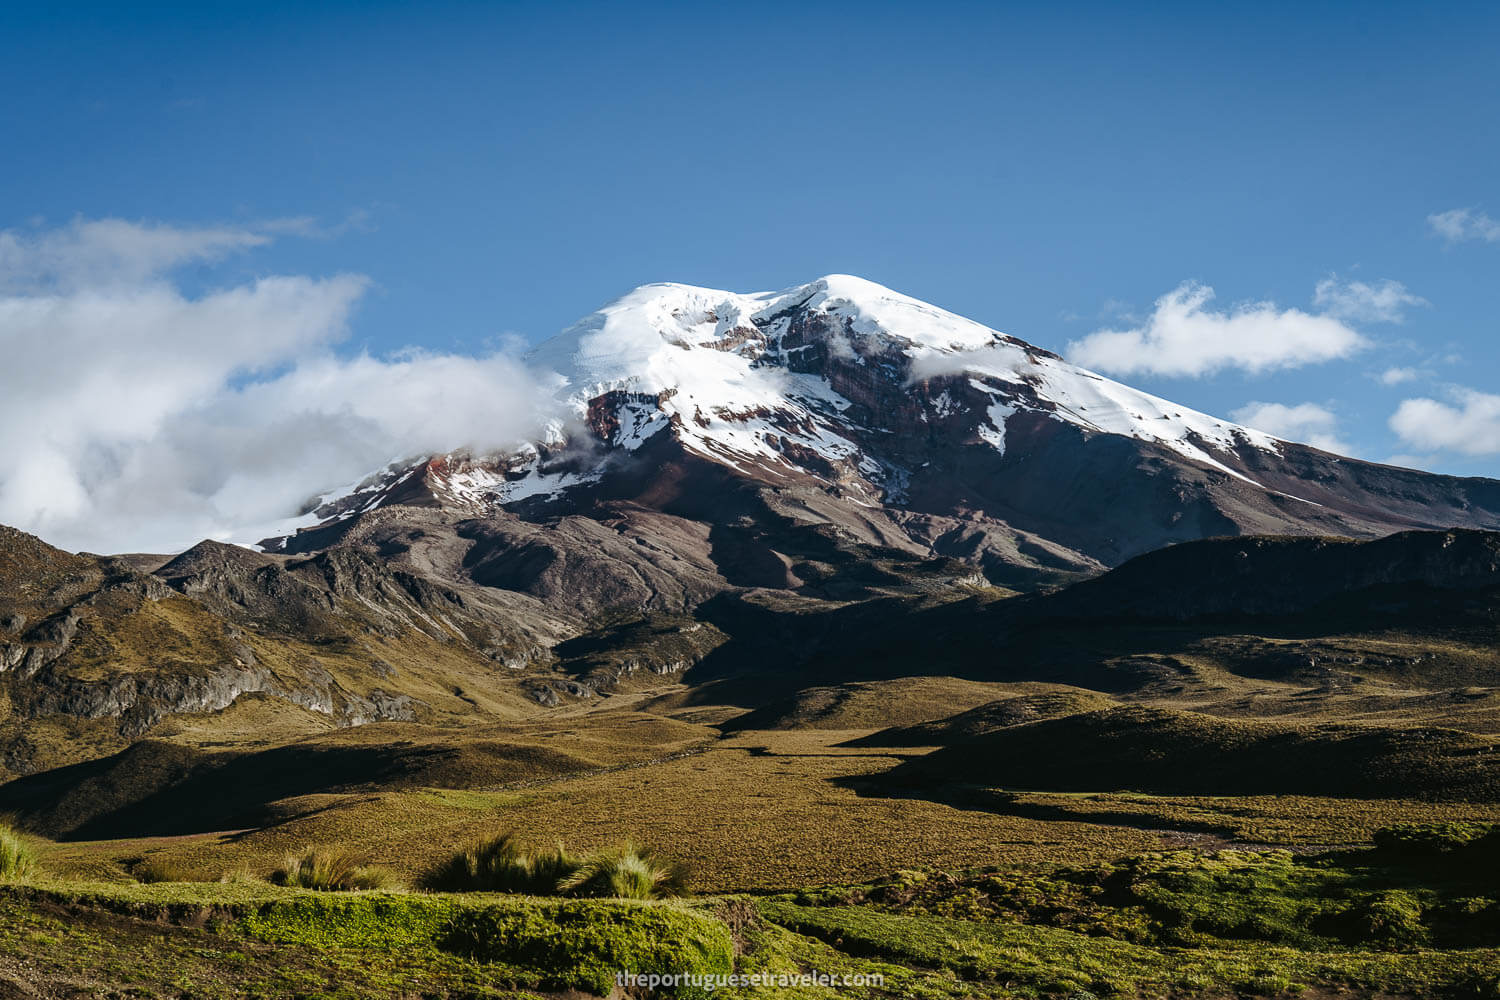 Chimborazo Volcano seen from the Carihuairazo's Refuge